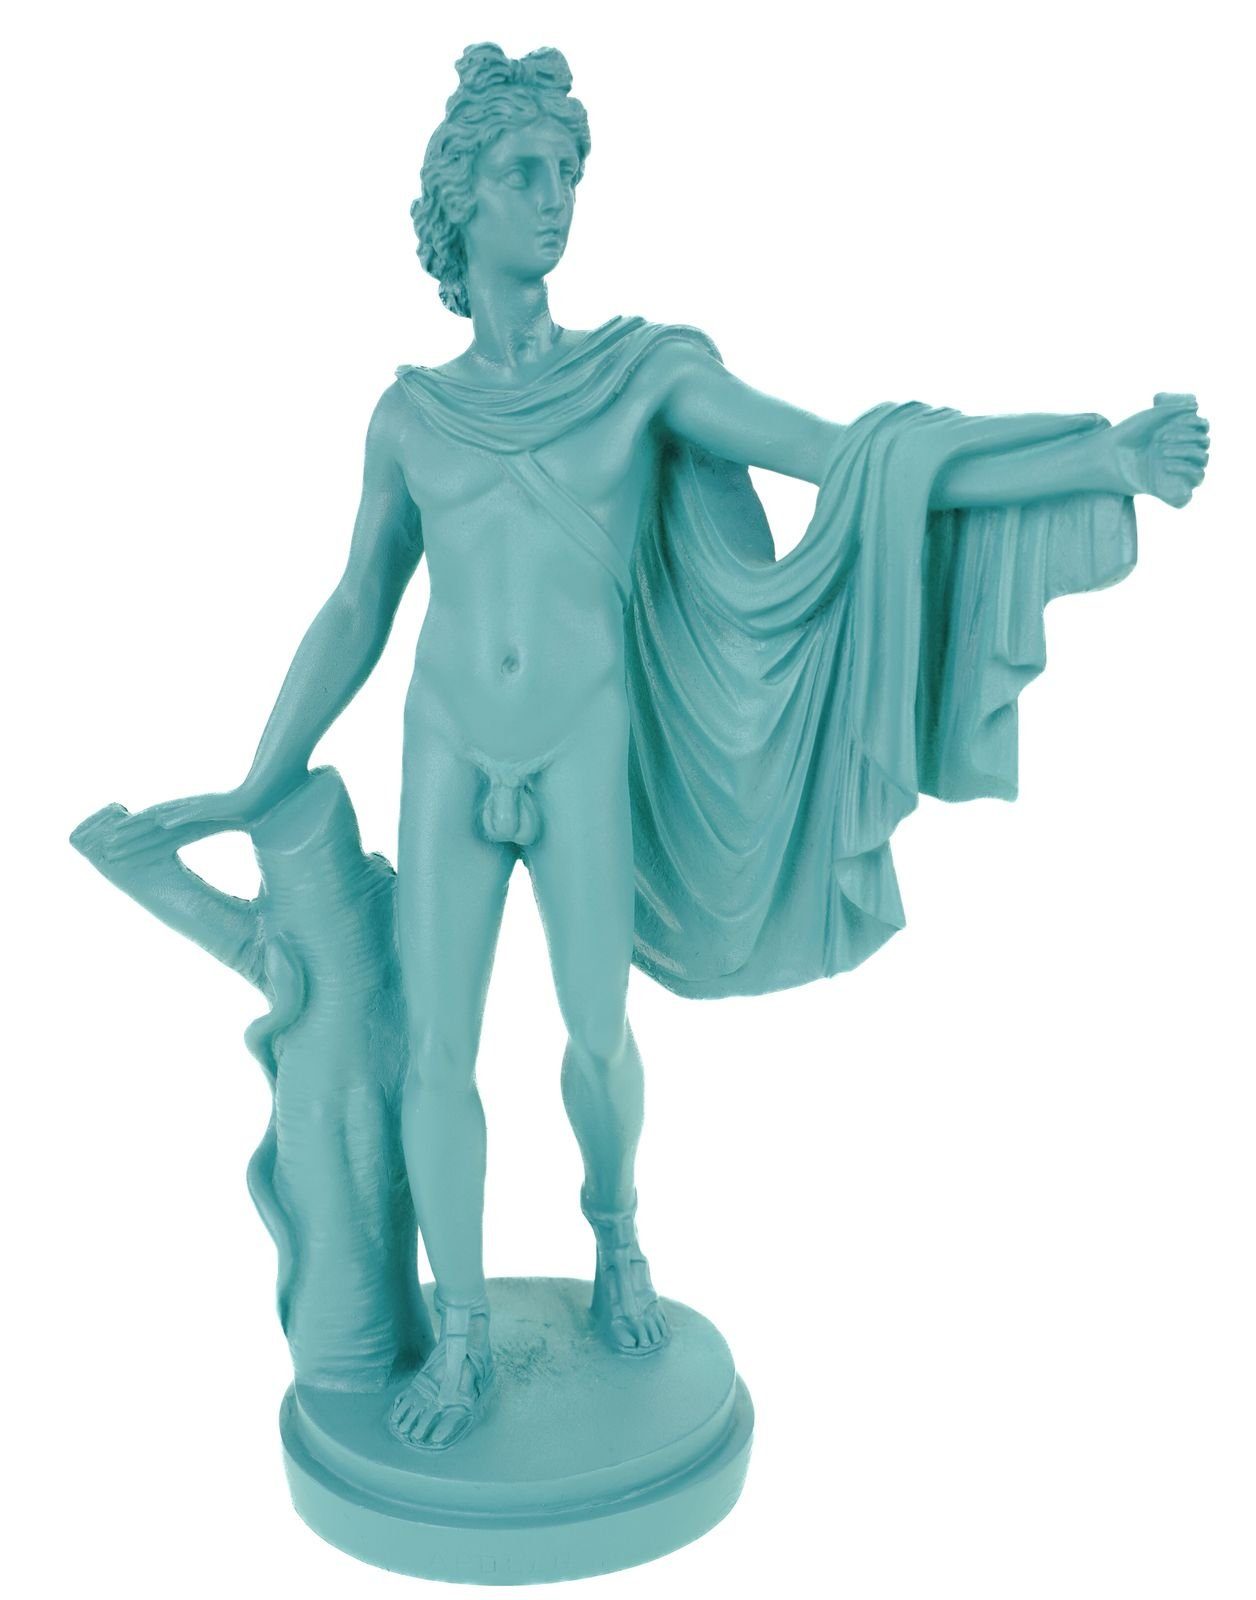 Kremers Schatzkiste Dekofigur Alabaster Figur Apollo Sonnengott Skulptur 24 cm Türkis Apollon